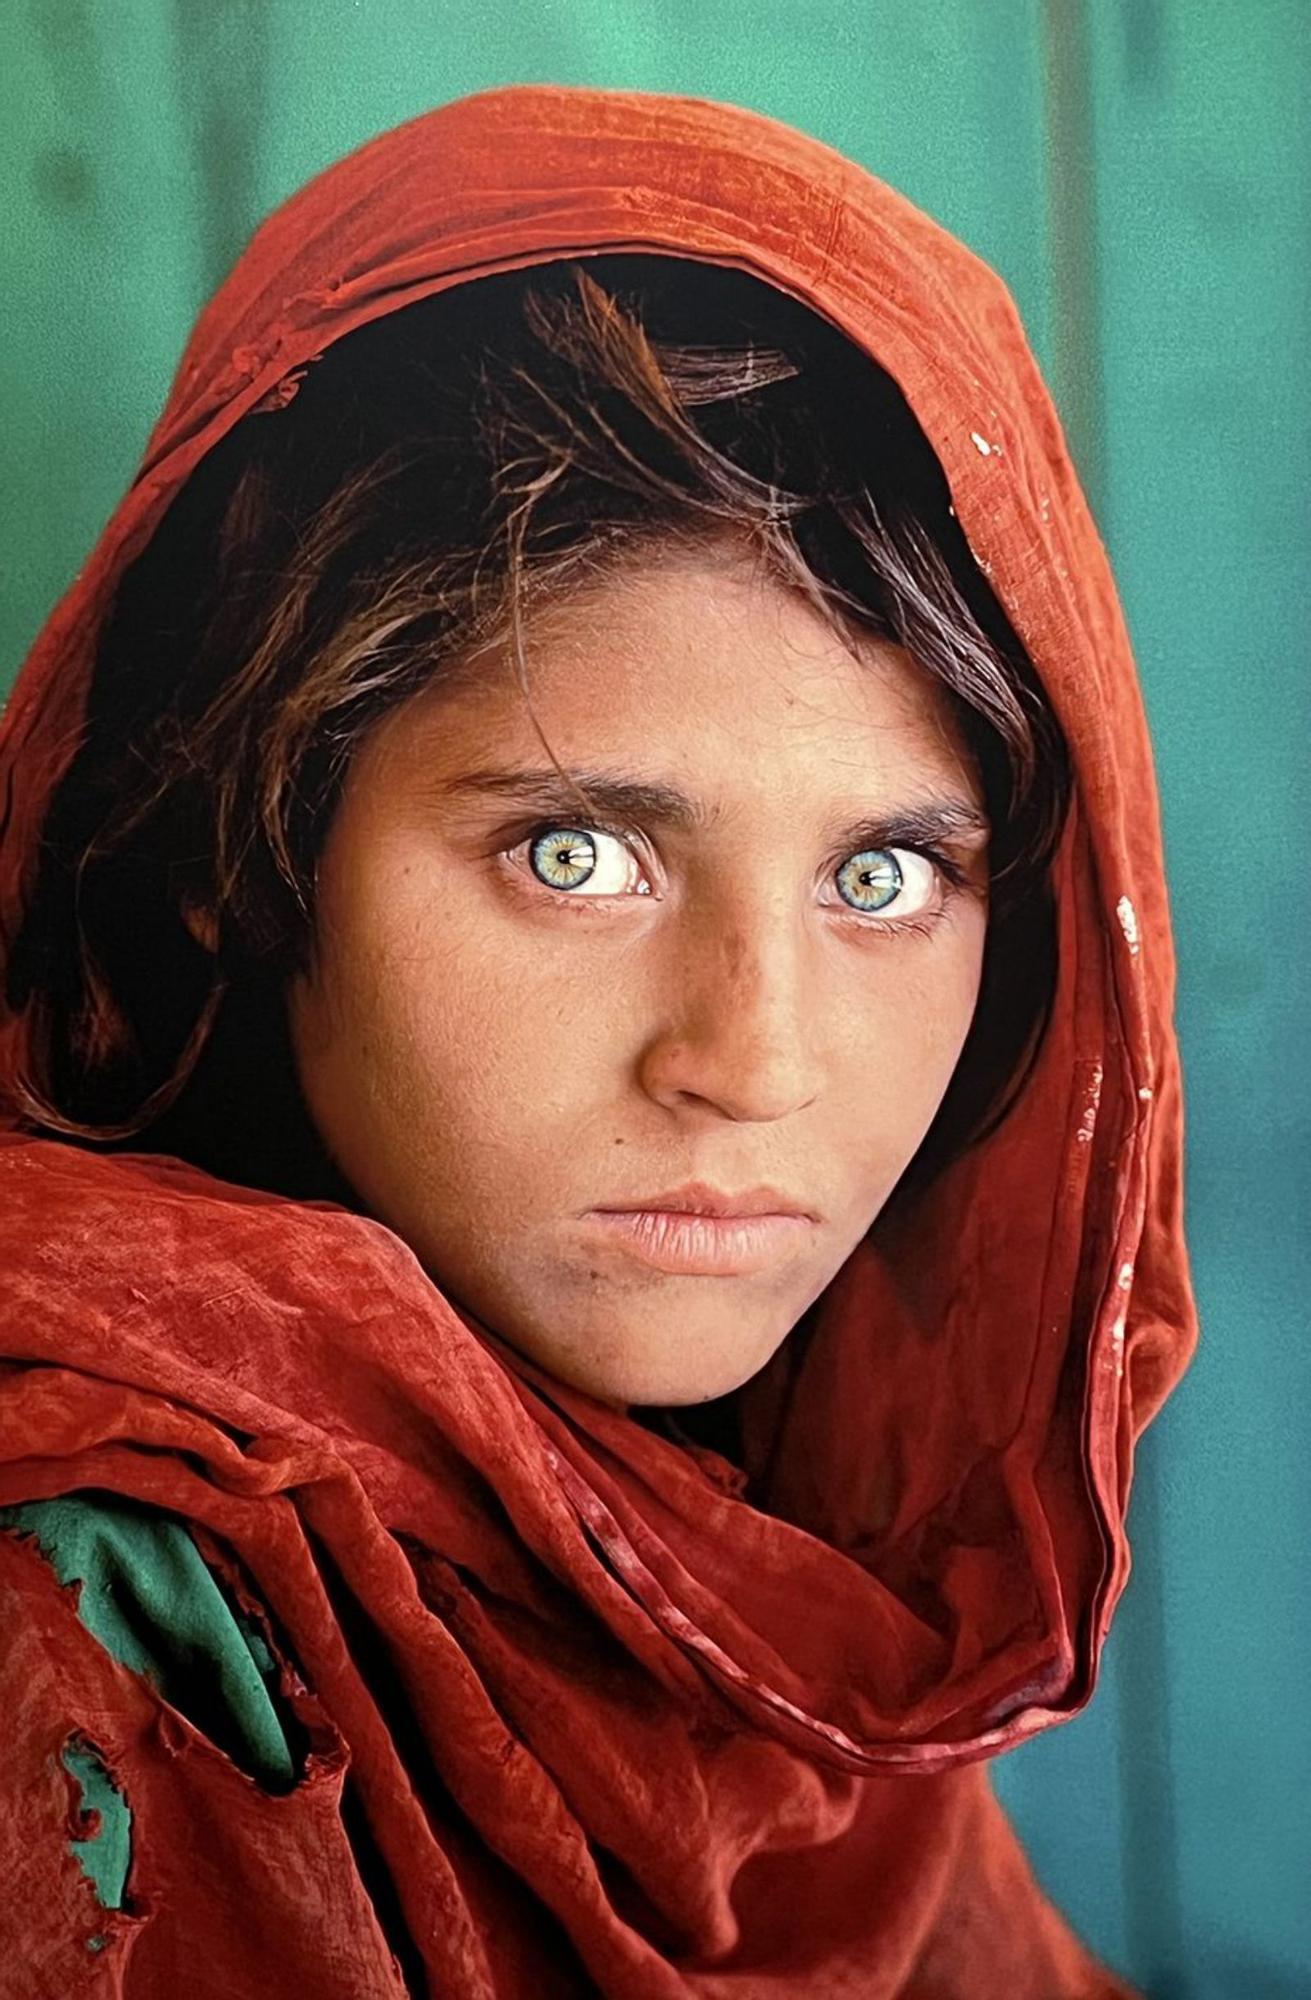 El retrato de la niña afgana. | F.F.